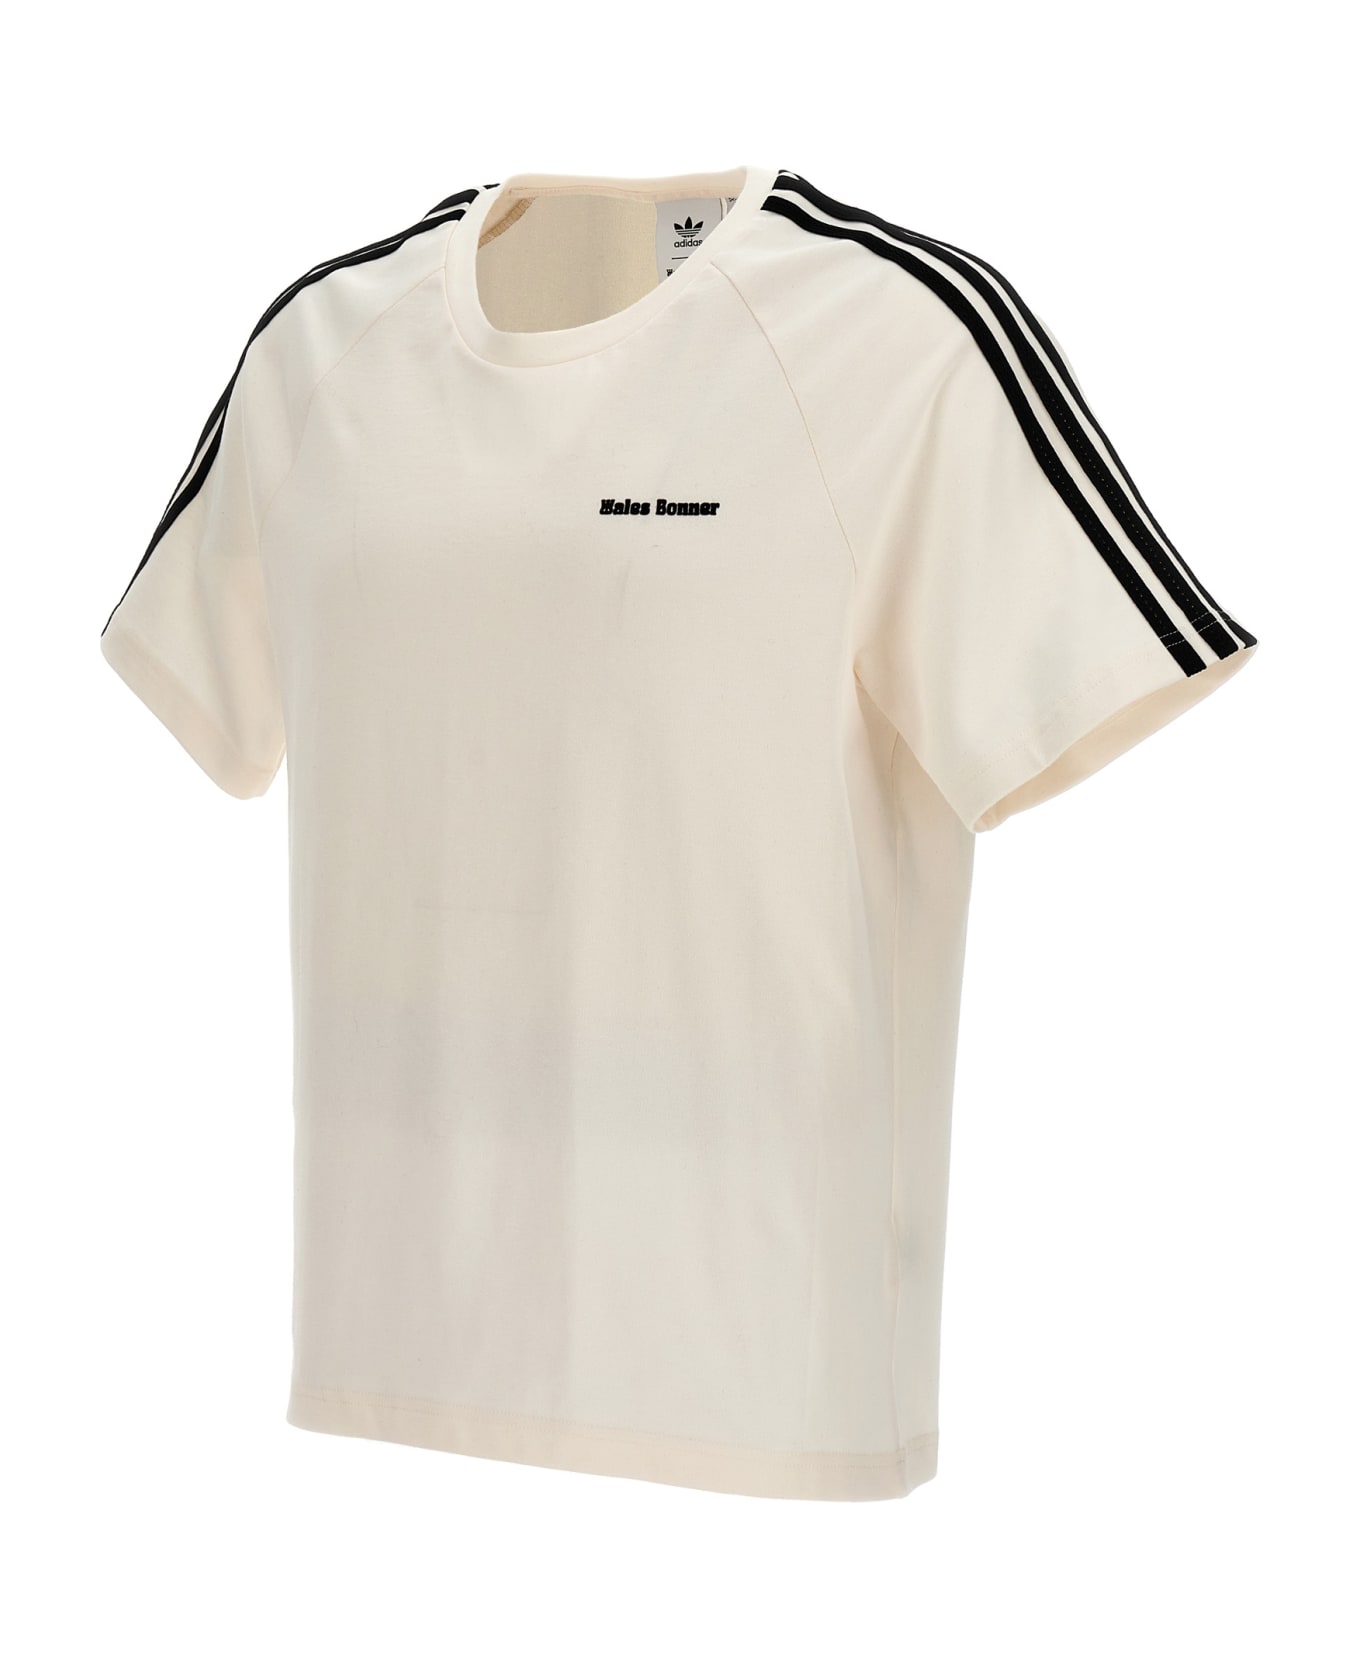 Adidas Originals by Wales Bonner T-shirt X Wales Bonner - Chalk White